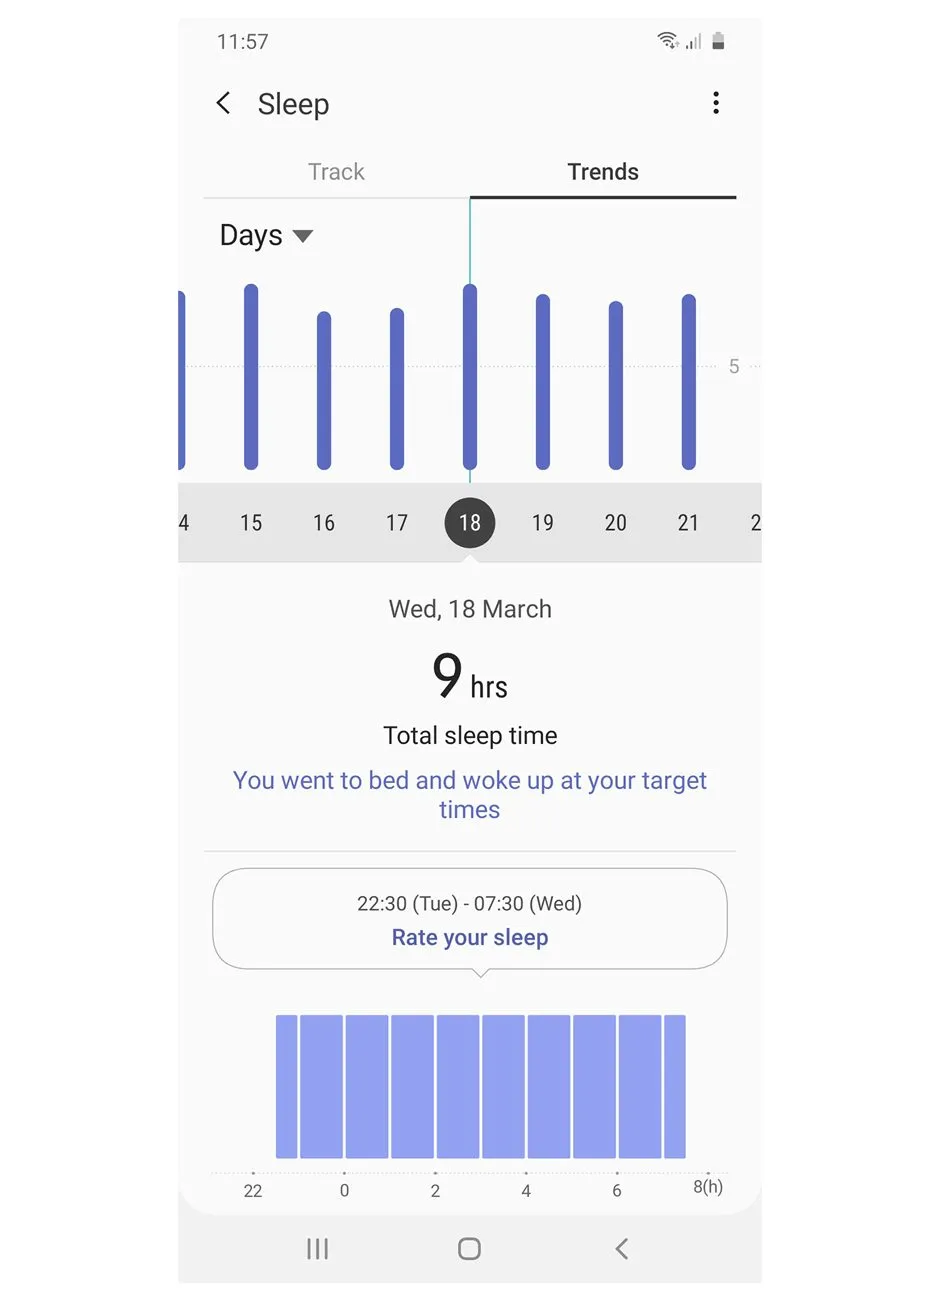 A screenshot of the Samsung Health sleep tracker